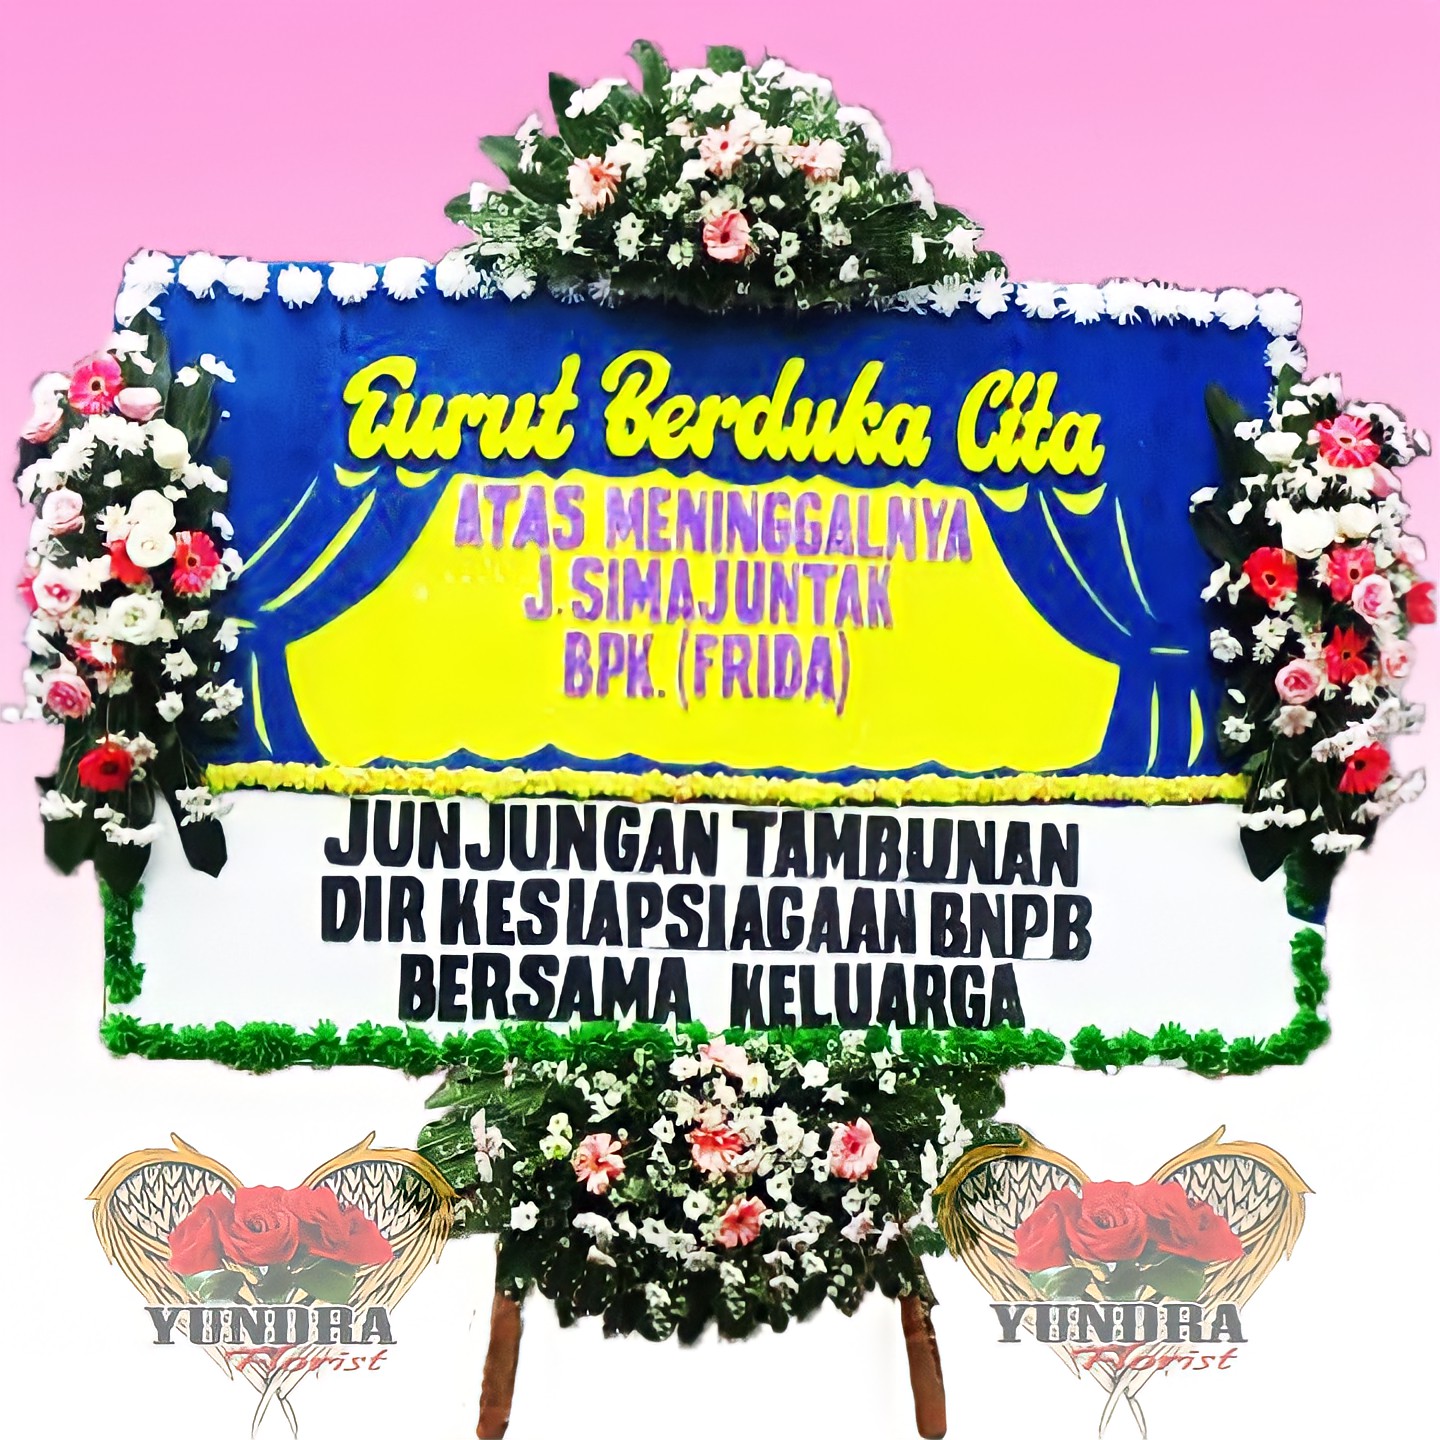 Toko Bunga Papan Duka Cita Di Bandung Kidul